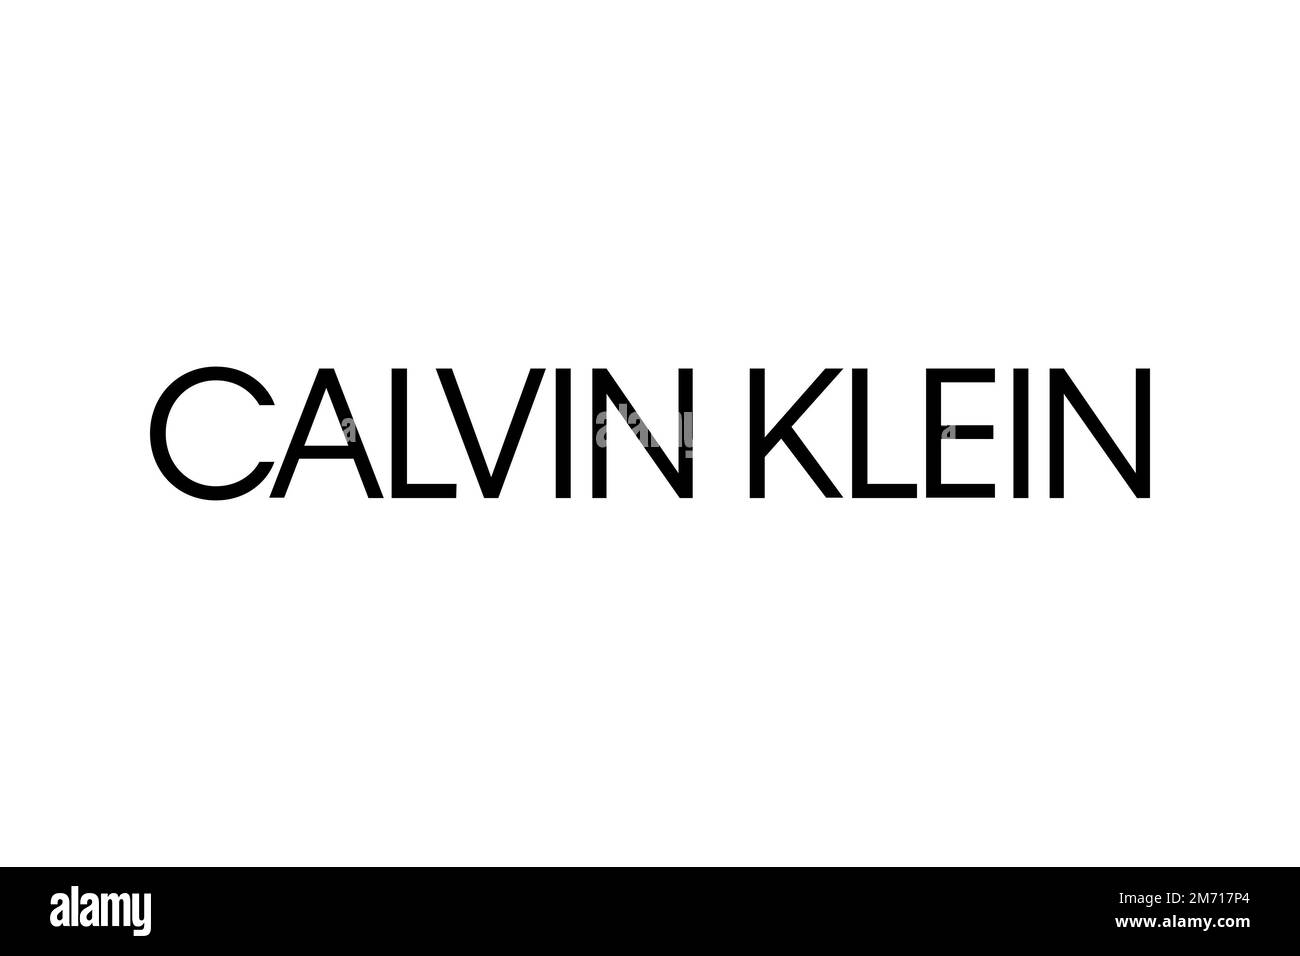 Calvin klein Black and White Stock Photos & Images - Alamy